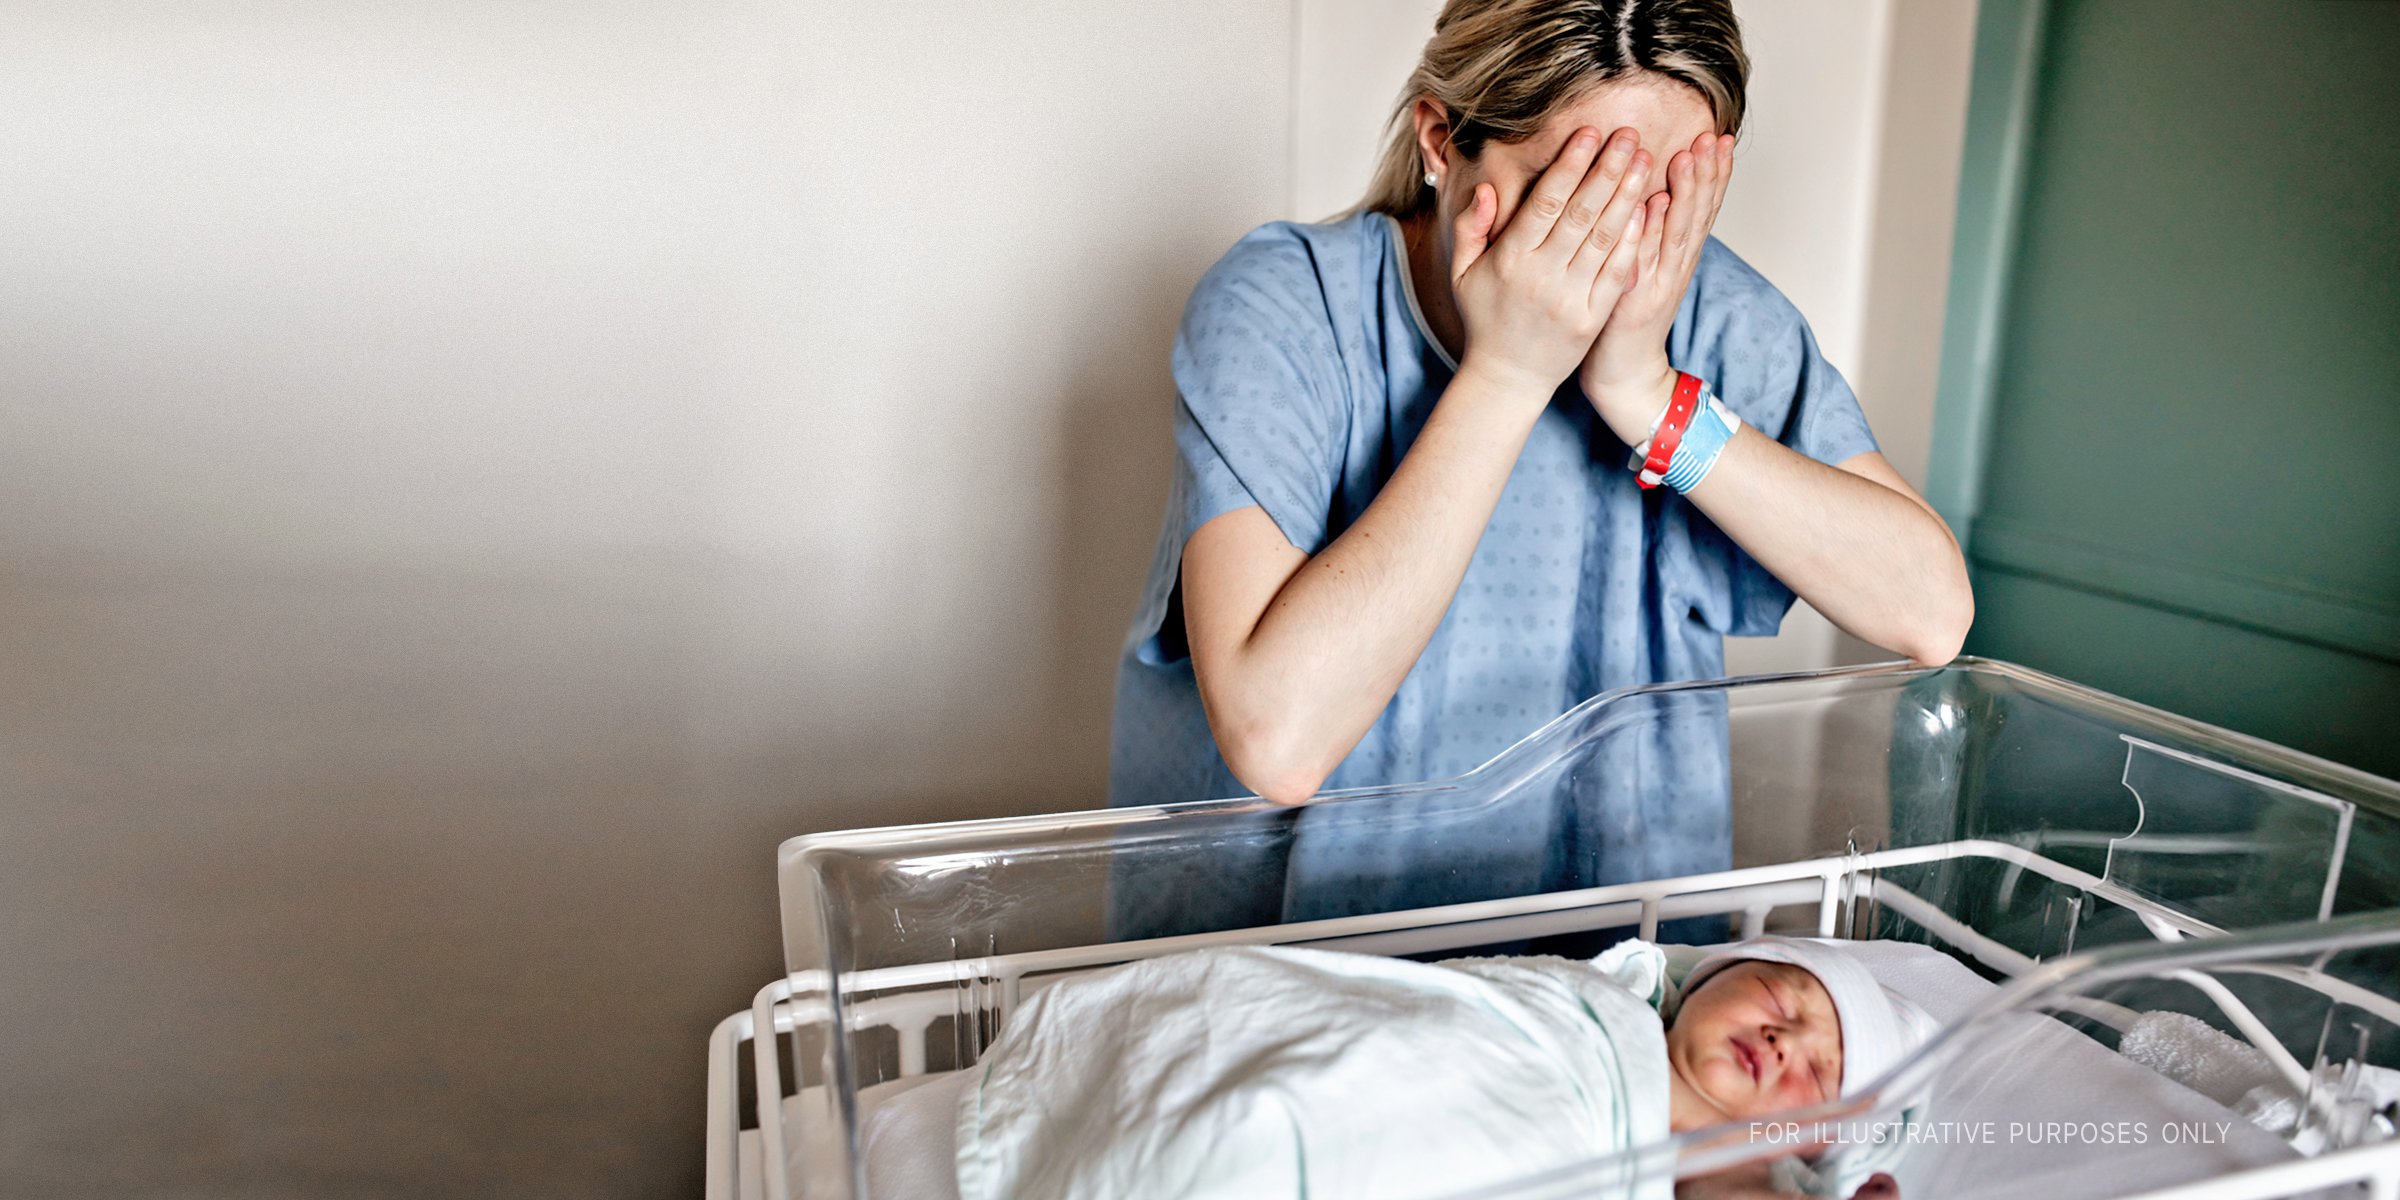 Mother crying near newborn baby in crib | Source: Shutterstock 